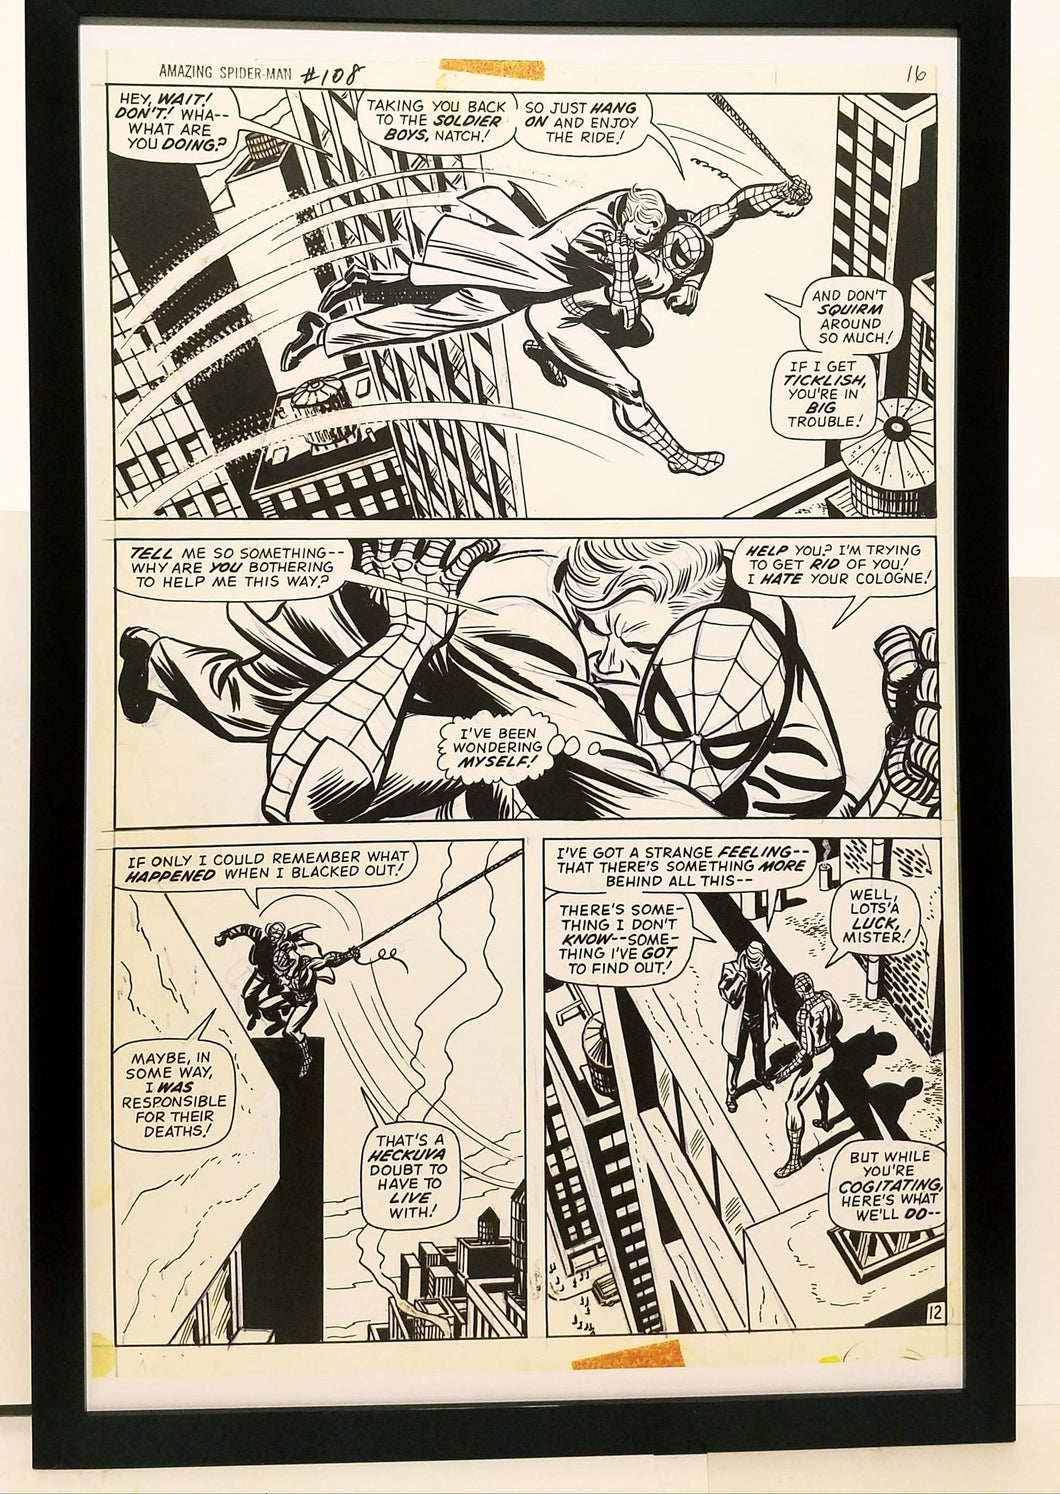 Amazing Spider-Man #108 pg. 12 John Romita 11x17 FRAMED Original Art Poster Marvel Comics